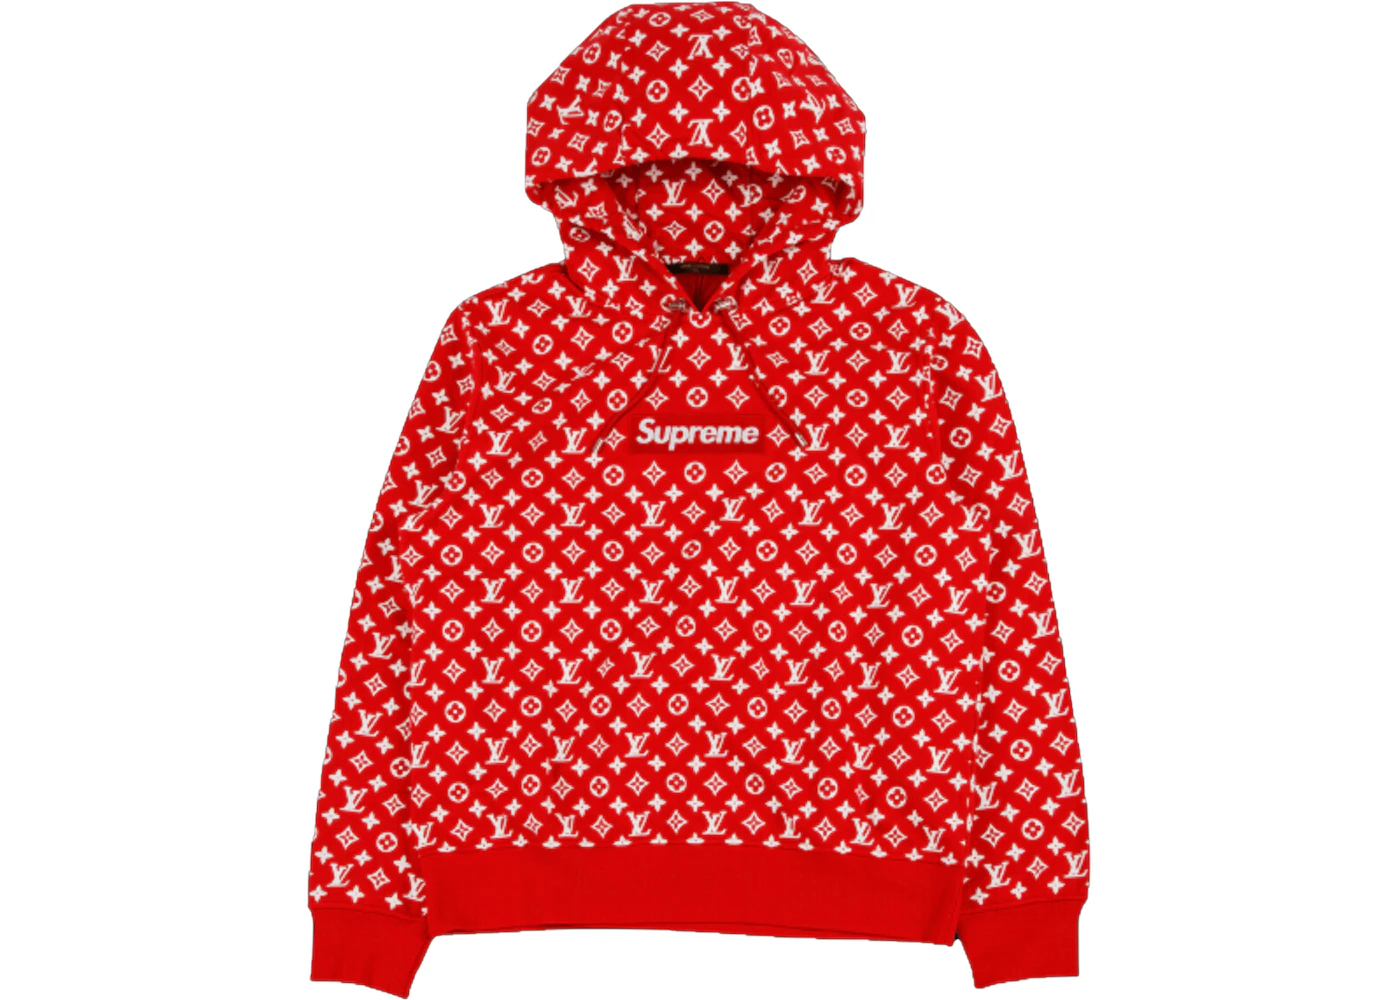 eksistens Koncentration Dynamics Supreme x Louis Vuitton Box Logo Hooded Sweatshirt Red - SS17 - US